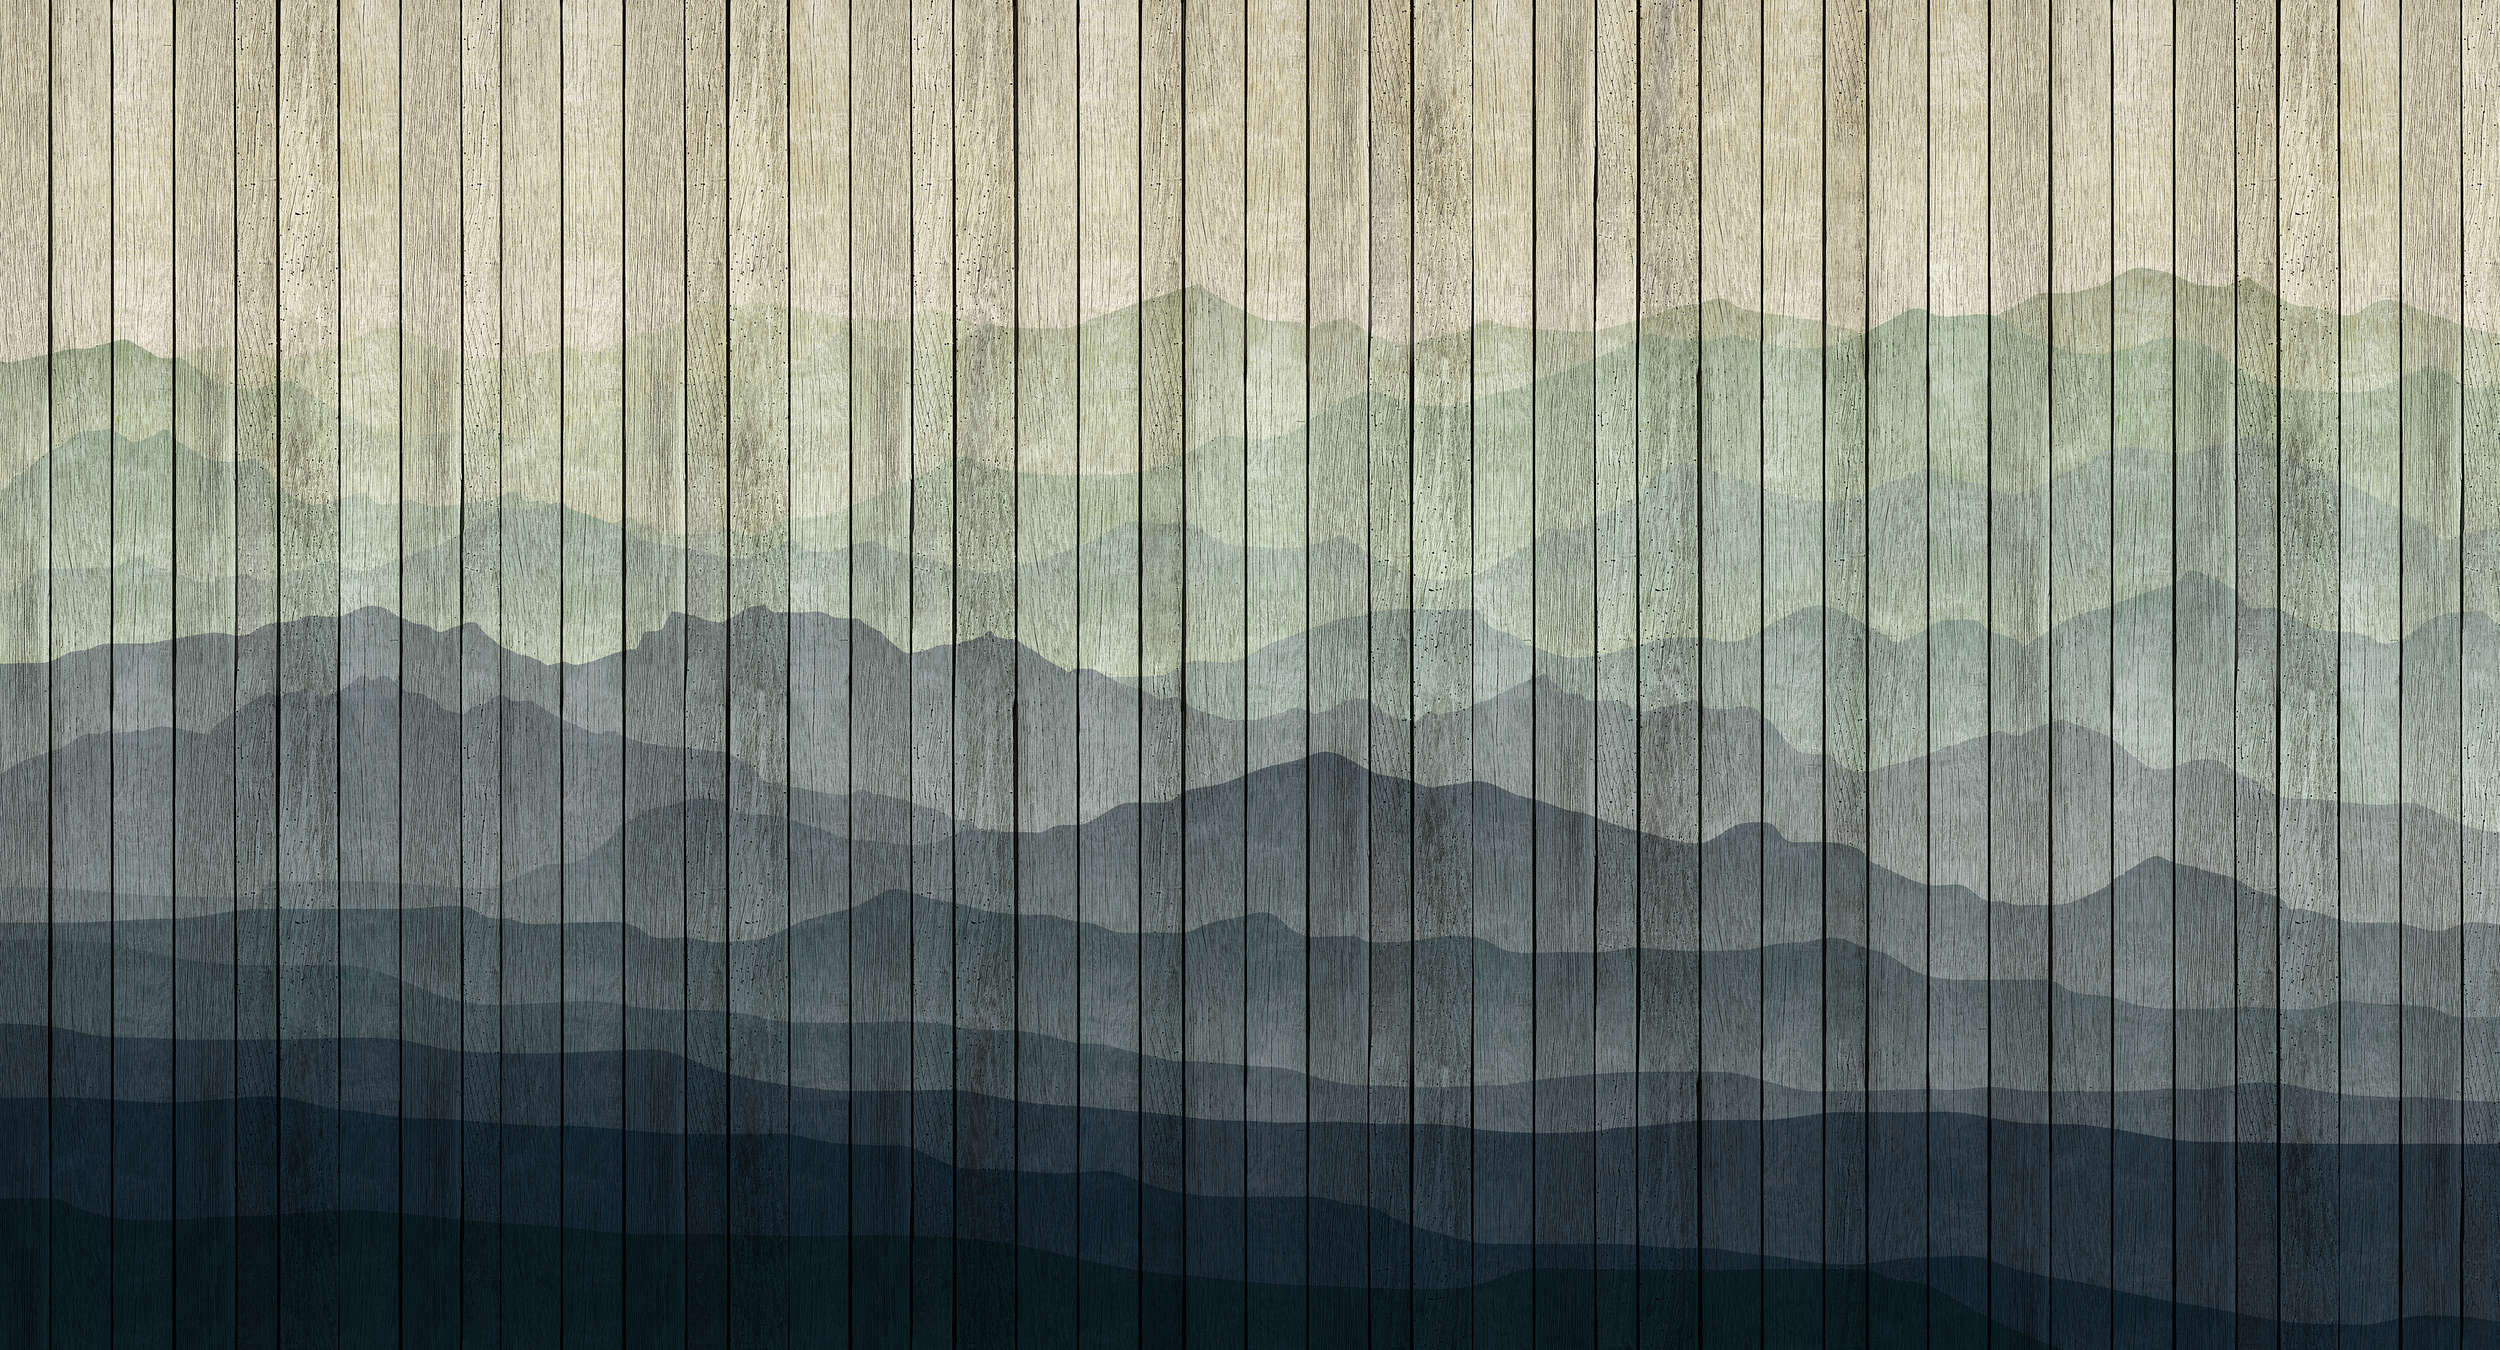             Mountains 1 - Modern Onderlaag behang Mountain Landscape & Board Optics - Beige, Blauw | Pearl Smooth Non-woven
        